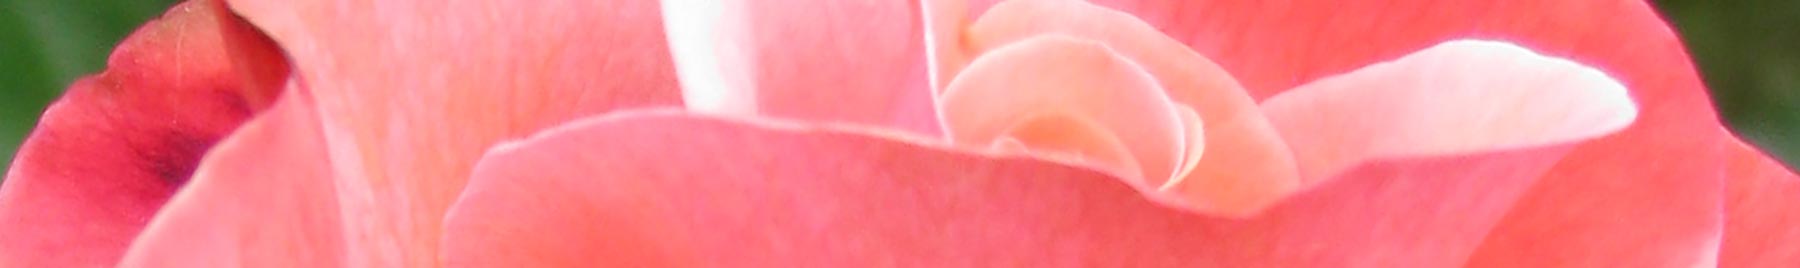 close up of rose